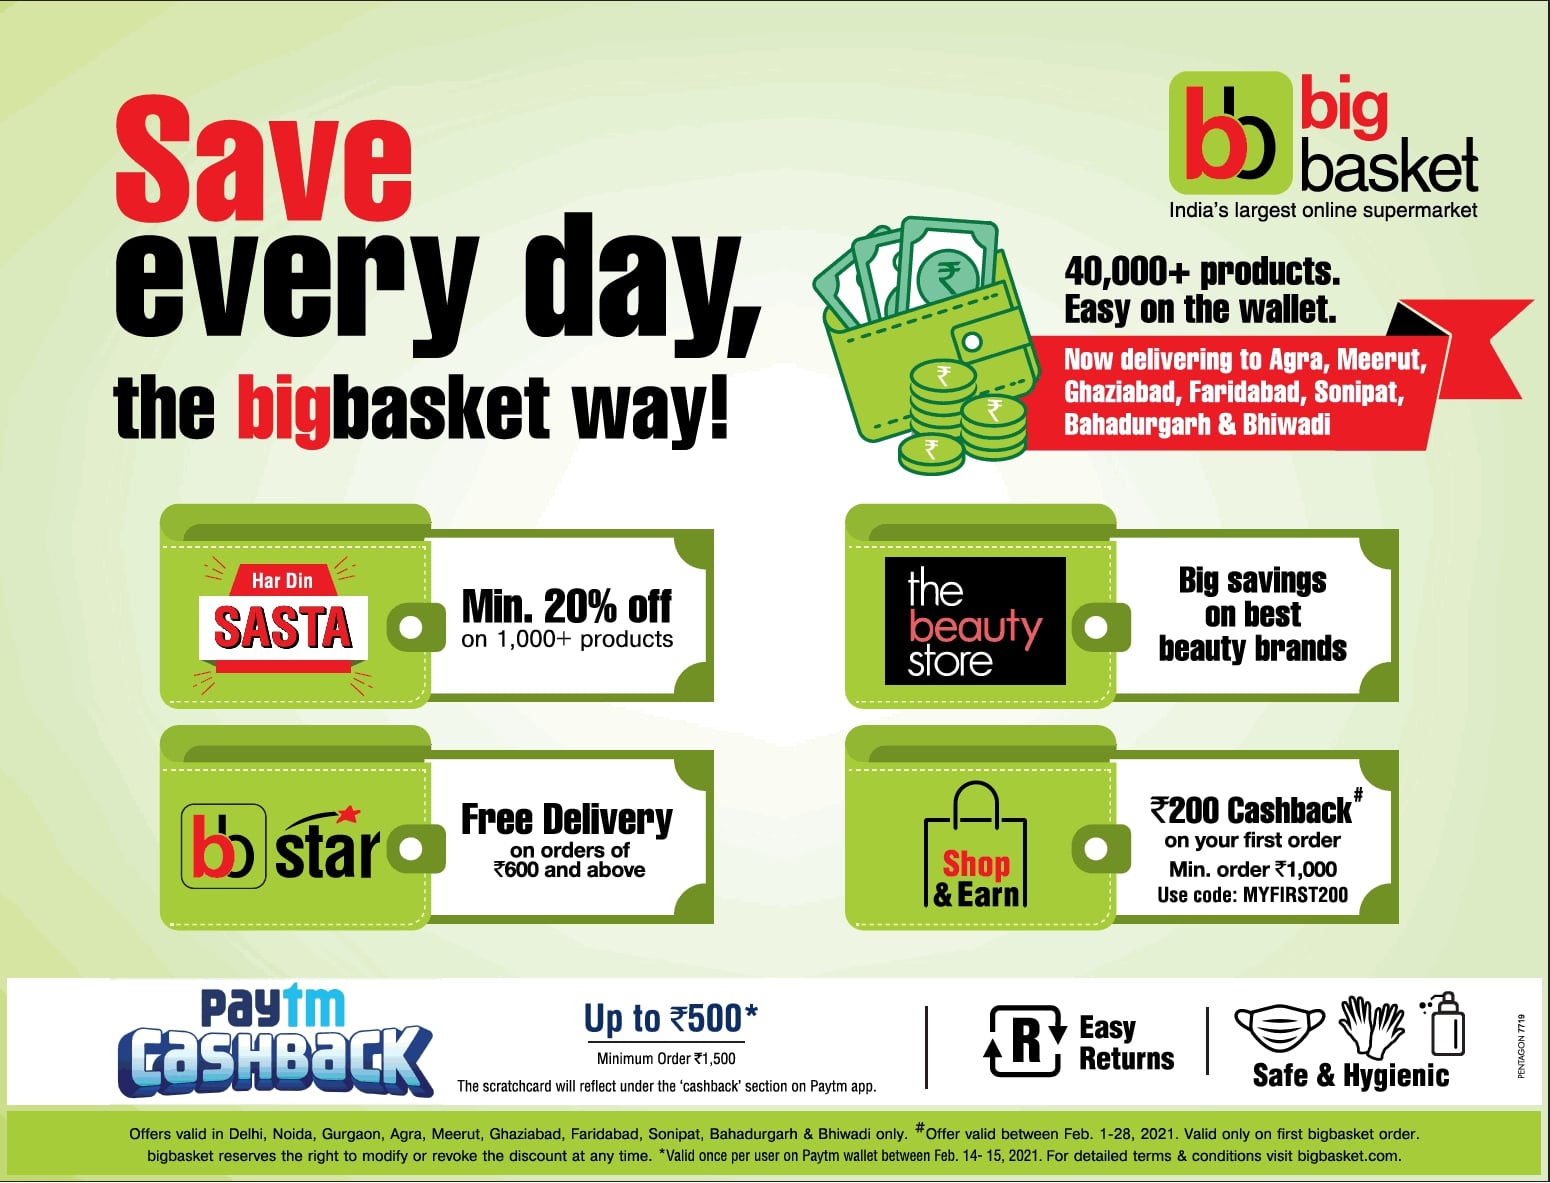 big-basket-paytm-cashback-ad-delhi-times-14-02-2021